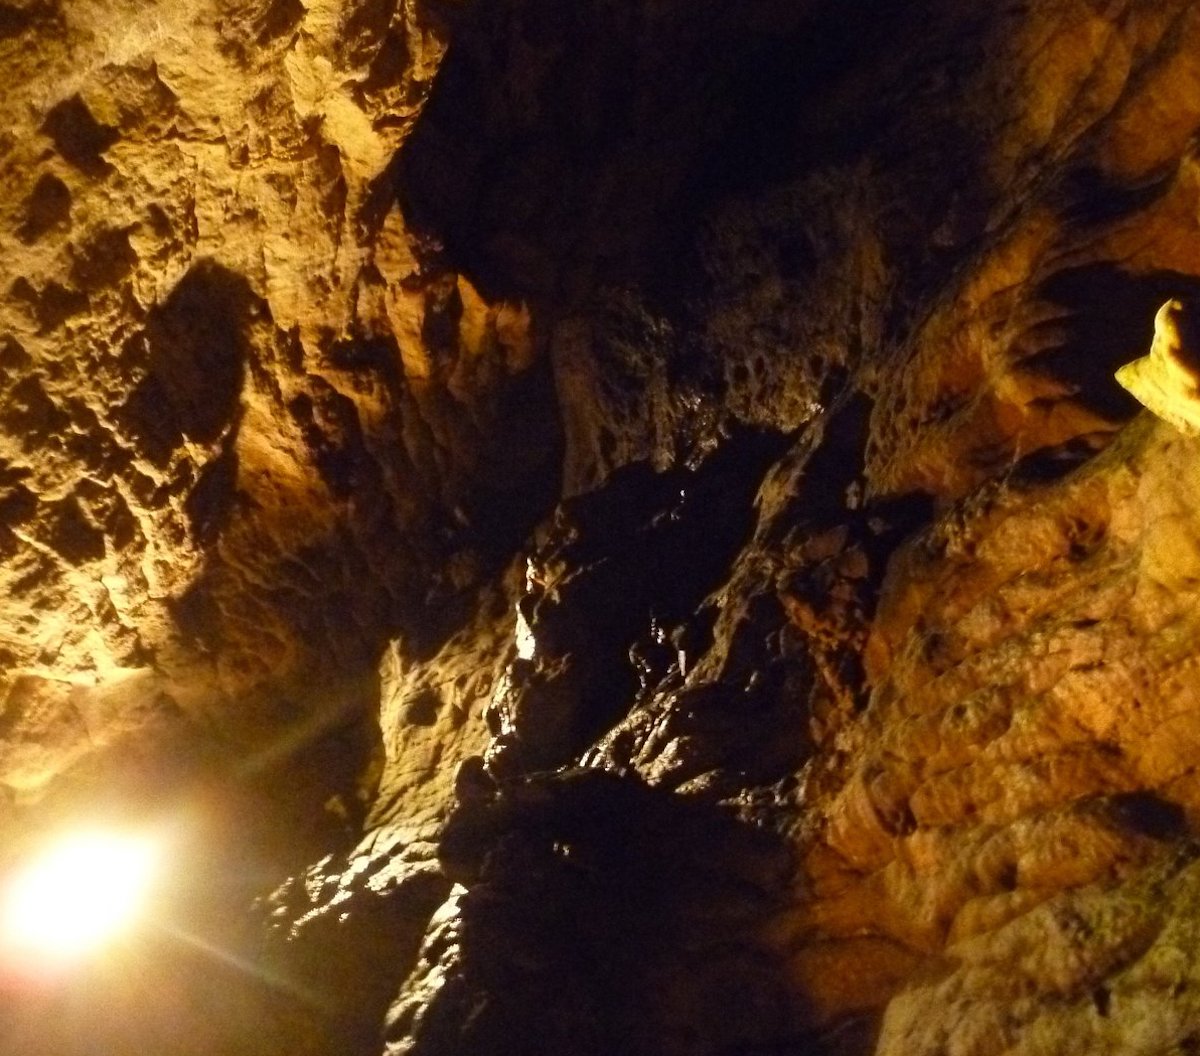 Palvolgyi Cave - Tempat Wisata Favorit dan Terkenal di Budapest